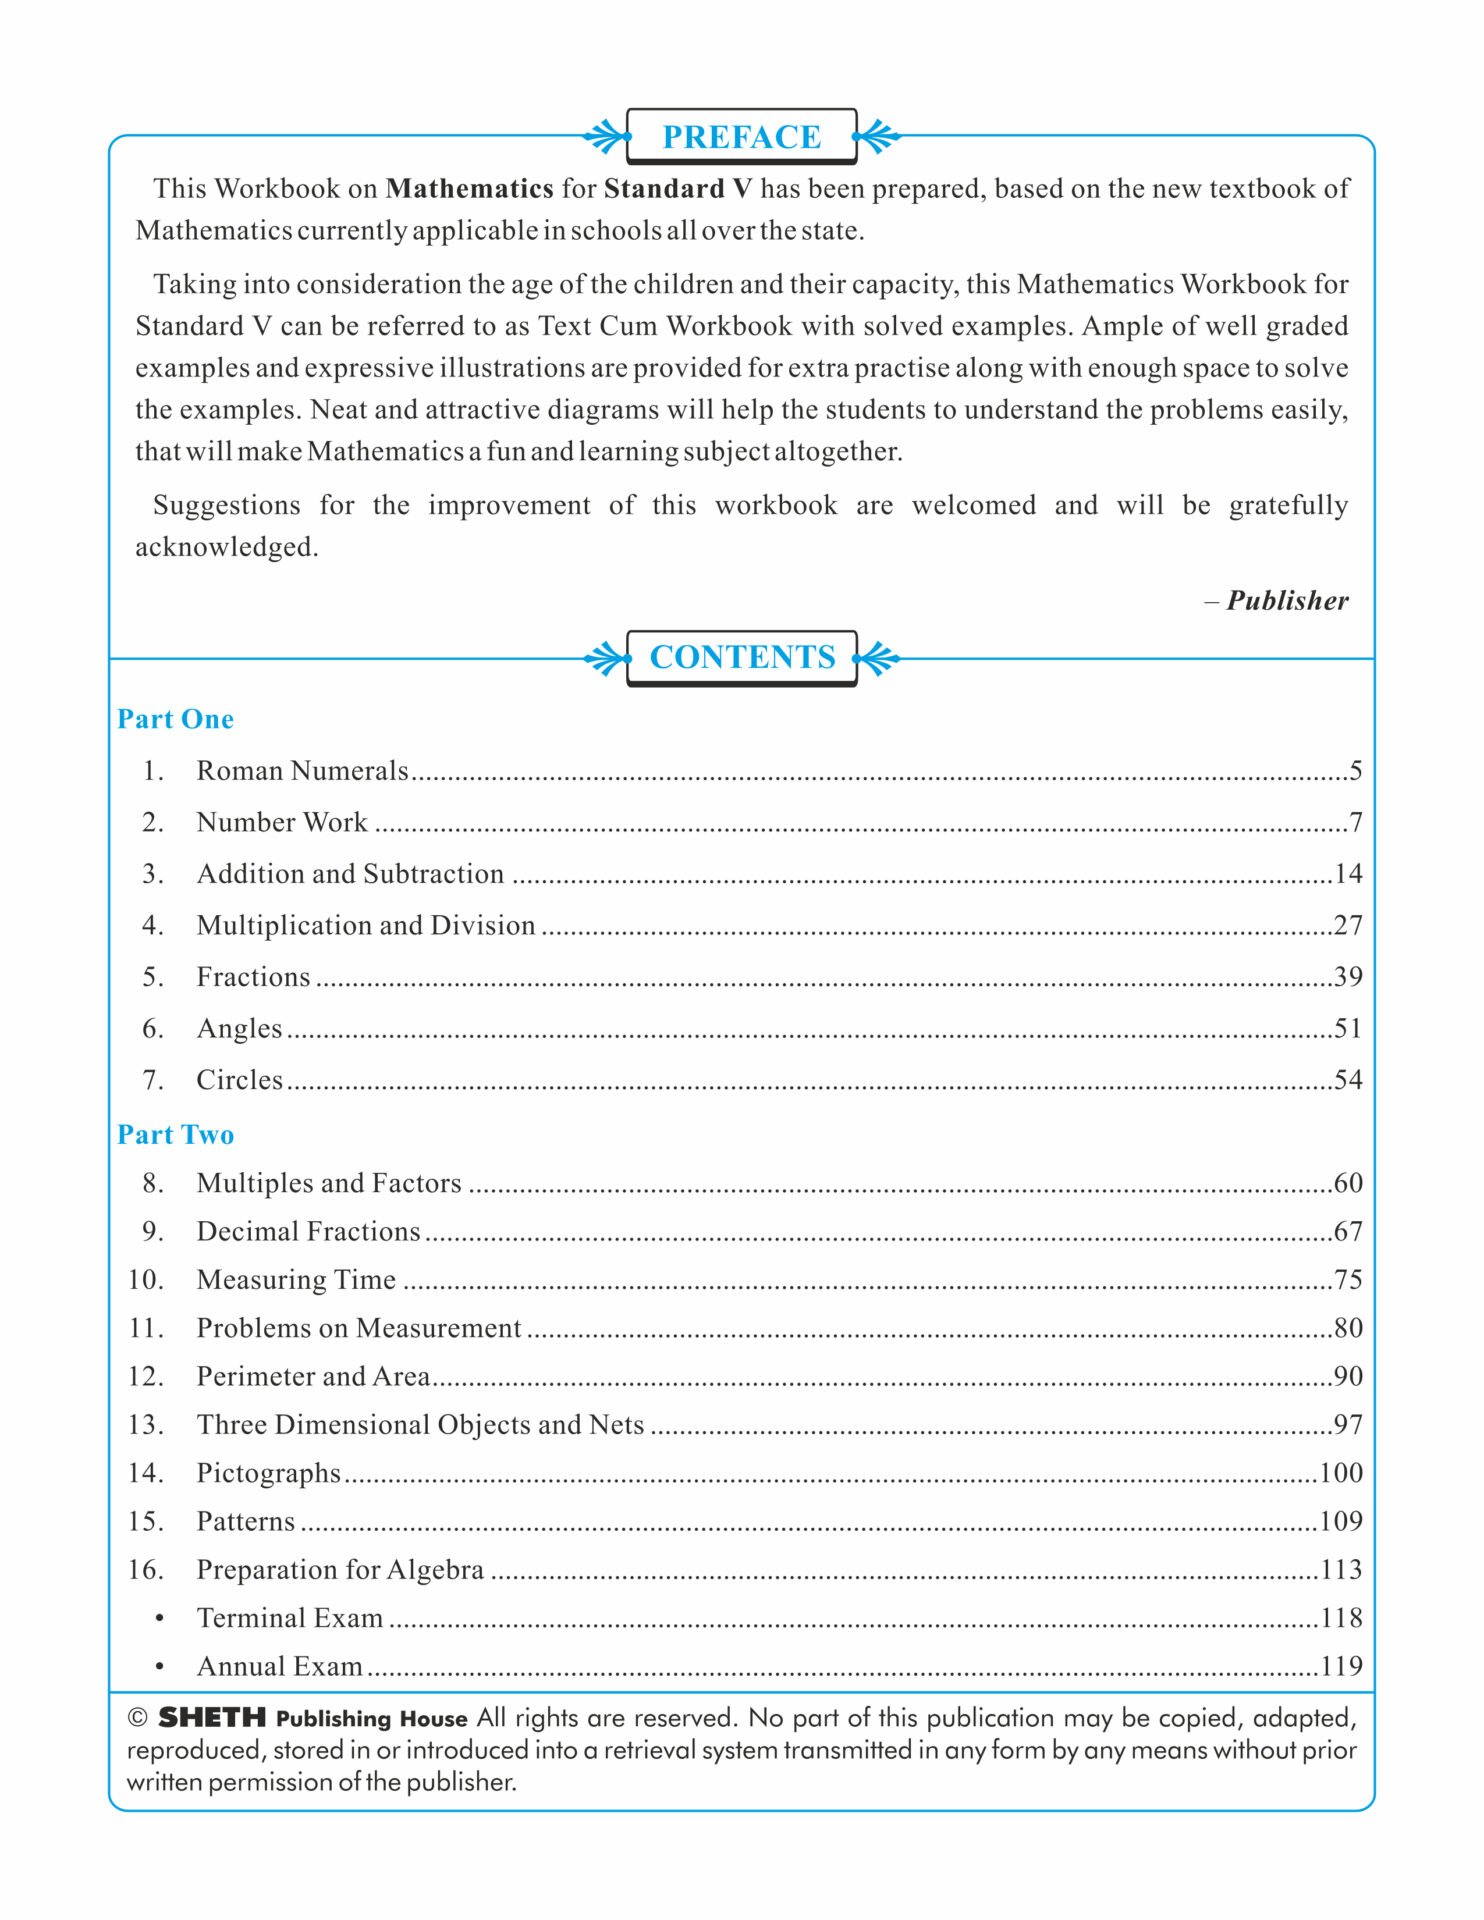 CCE Pattern Nigam Scholar Workbooks Mathematics Standard 5 2